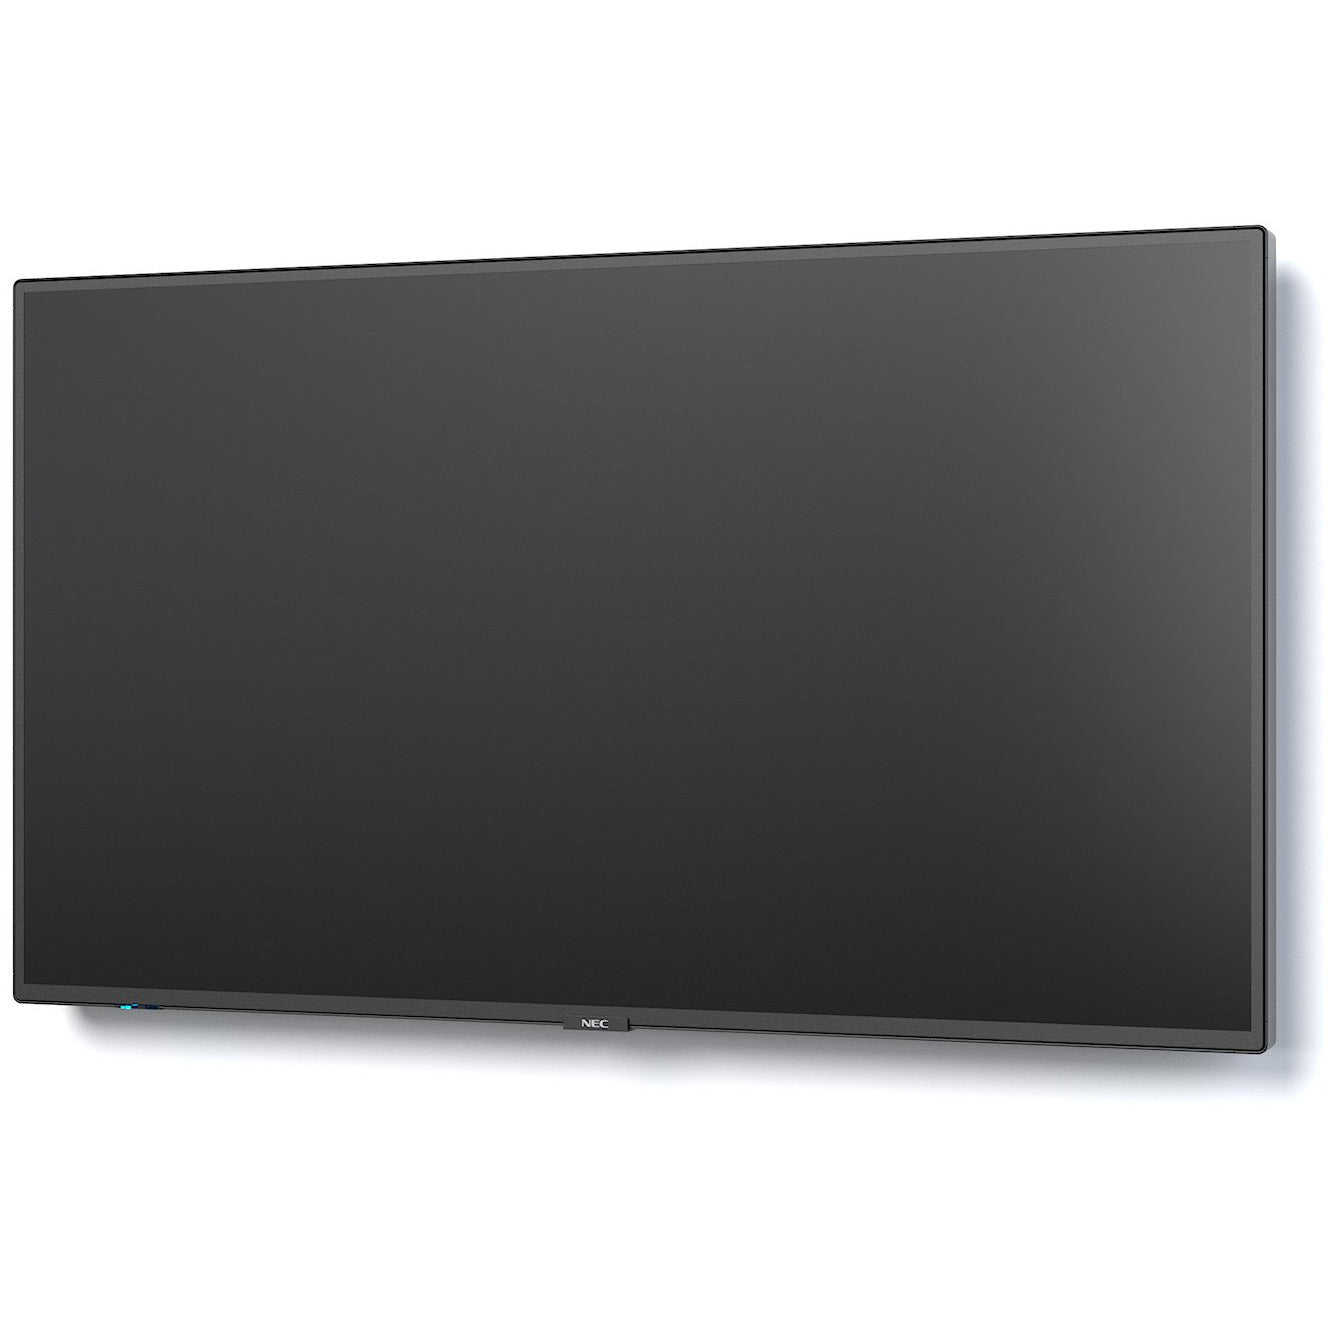 NEC MultiSync® M431-MPi4 LCD 43" Midrange Large Format Display (incl. NEC MediaPlayer)